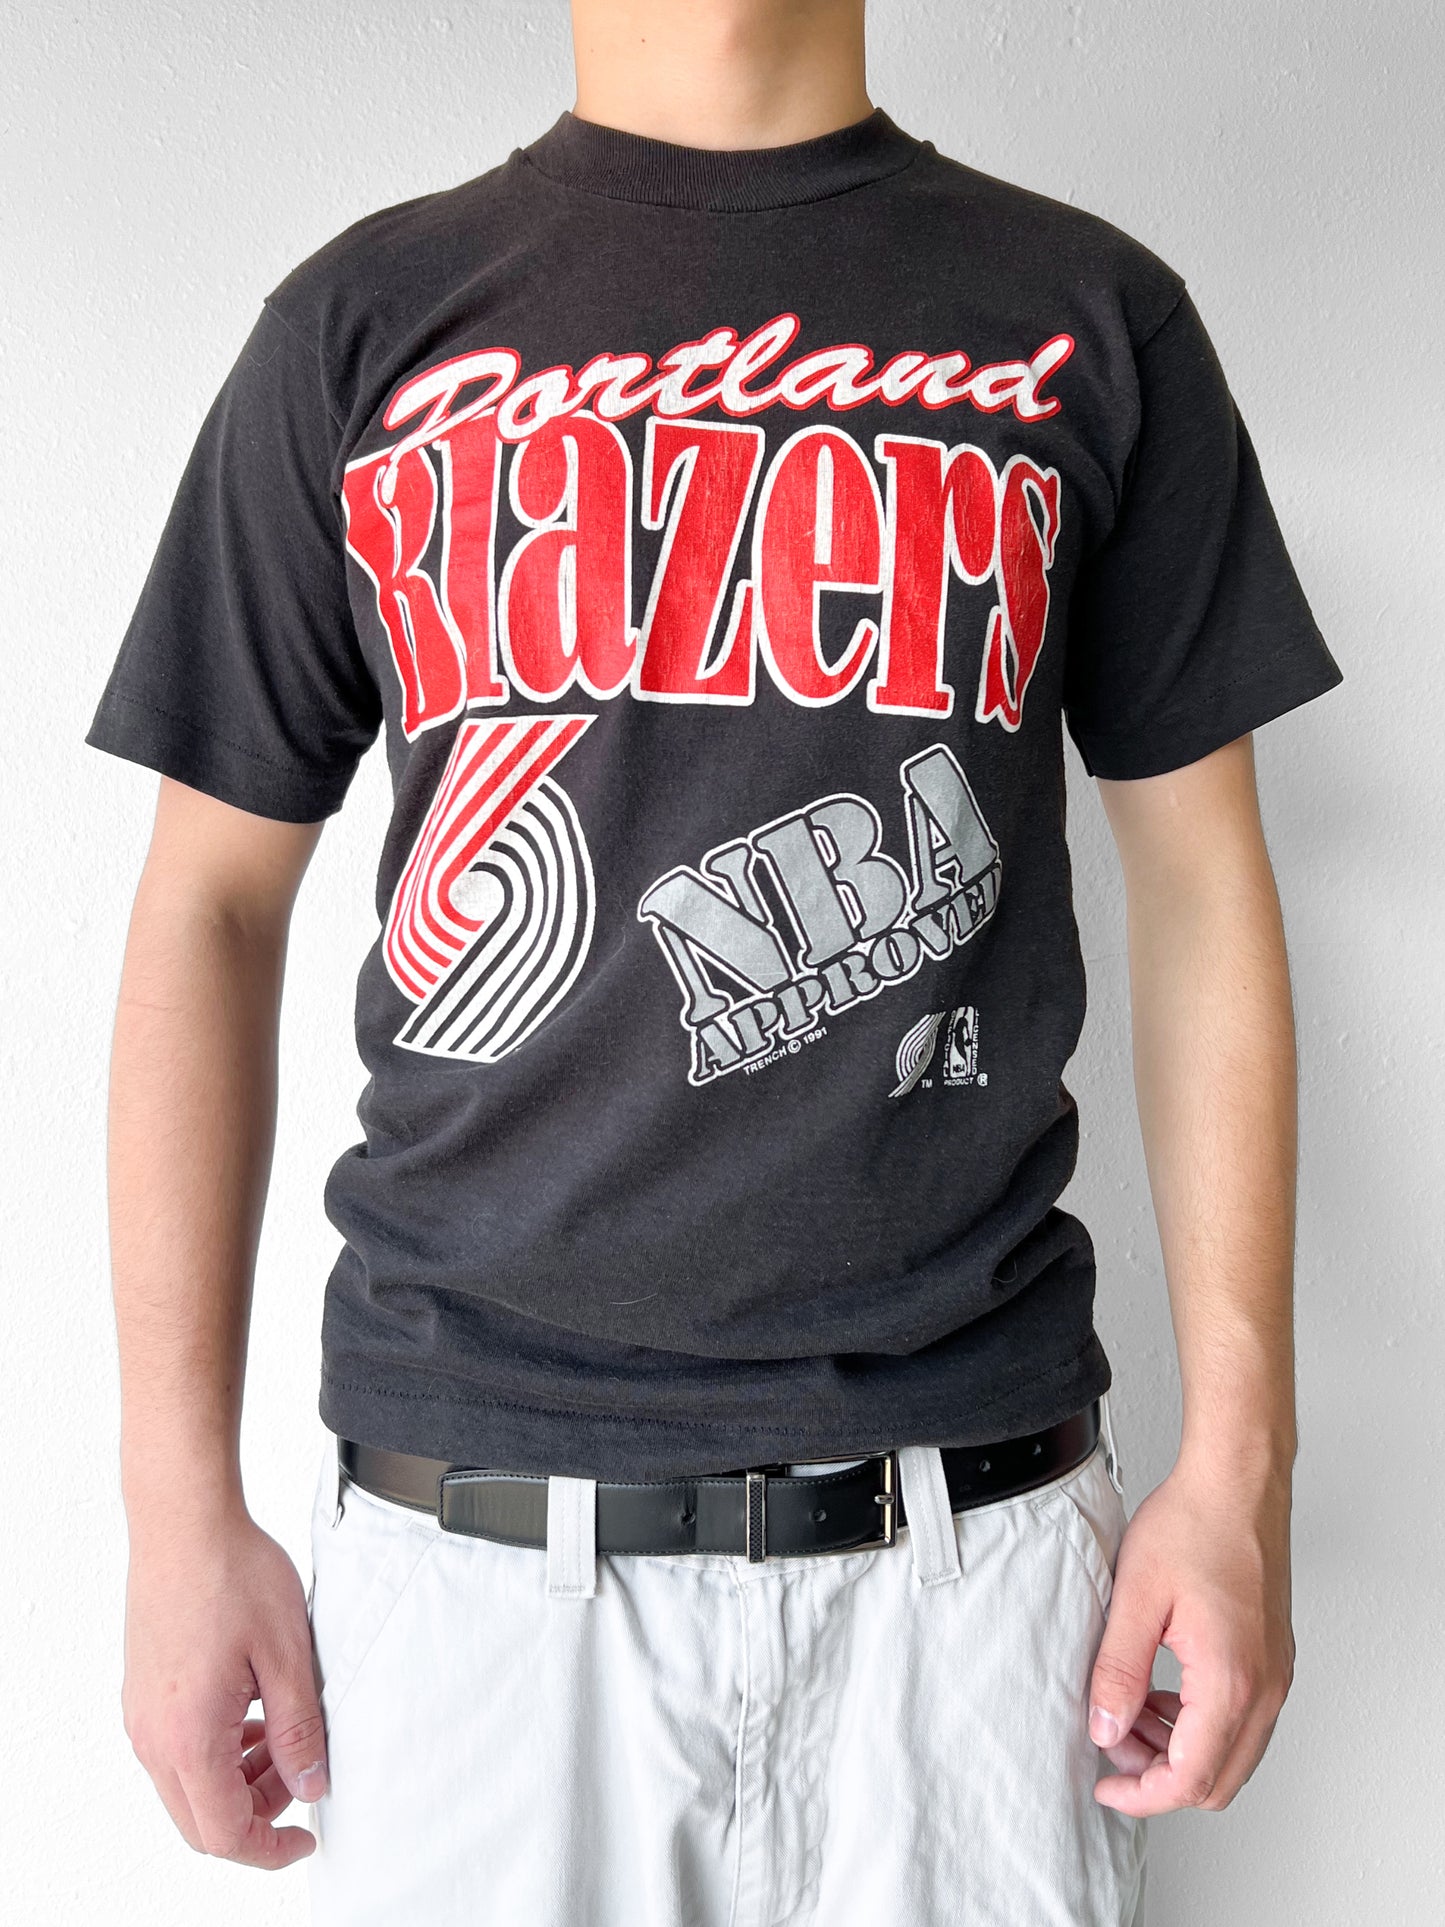 1991 NBA Portland Trailblazers Shirt - S